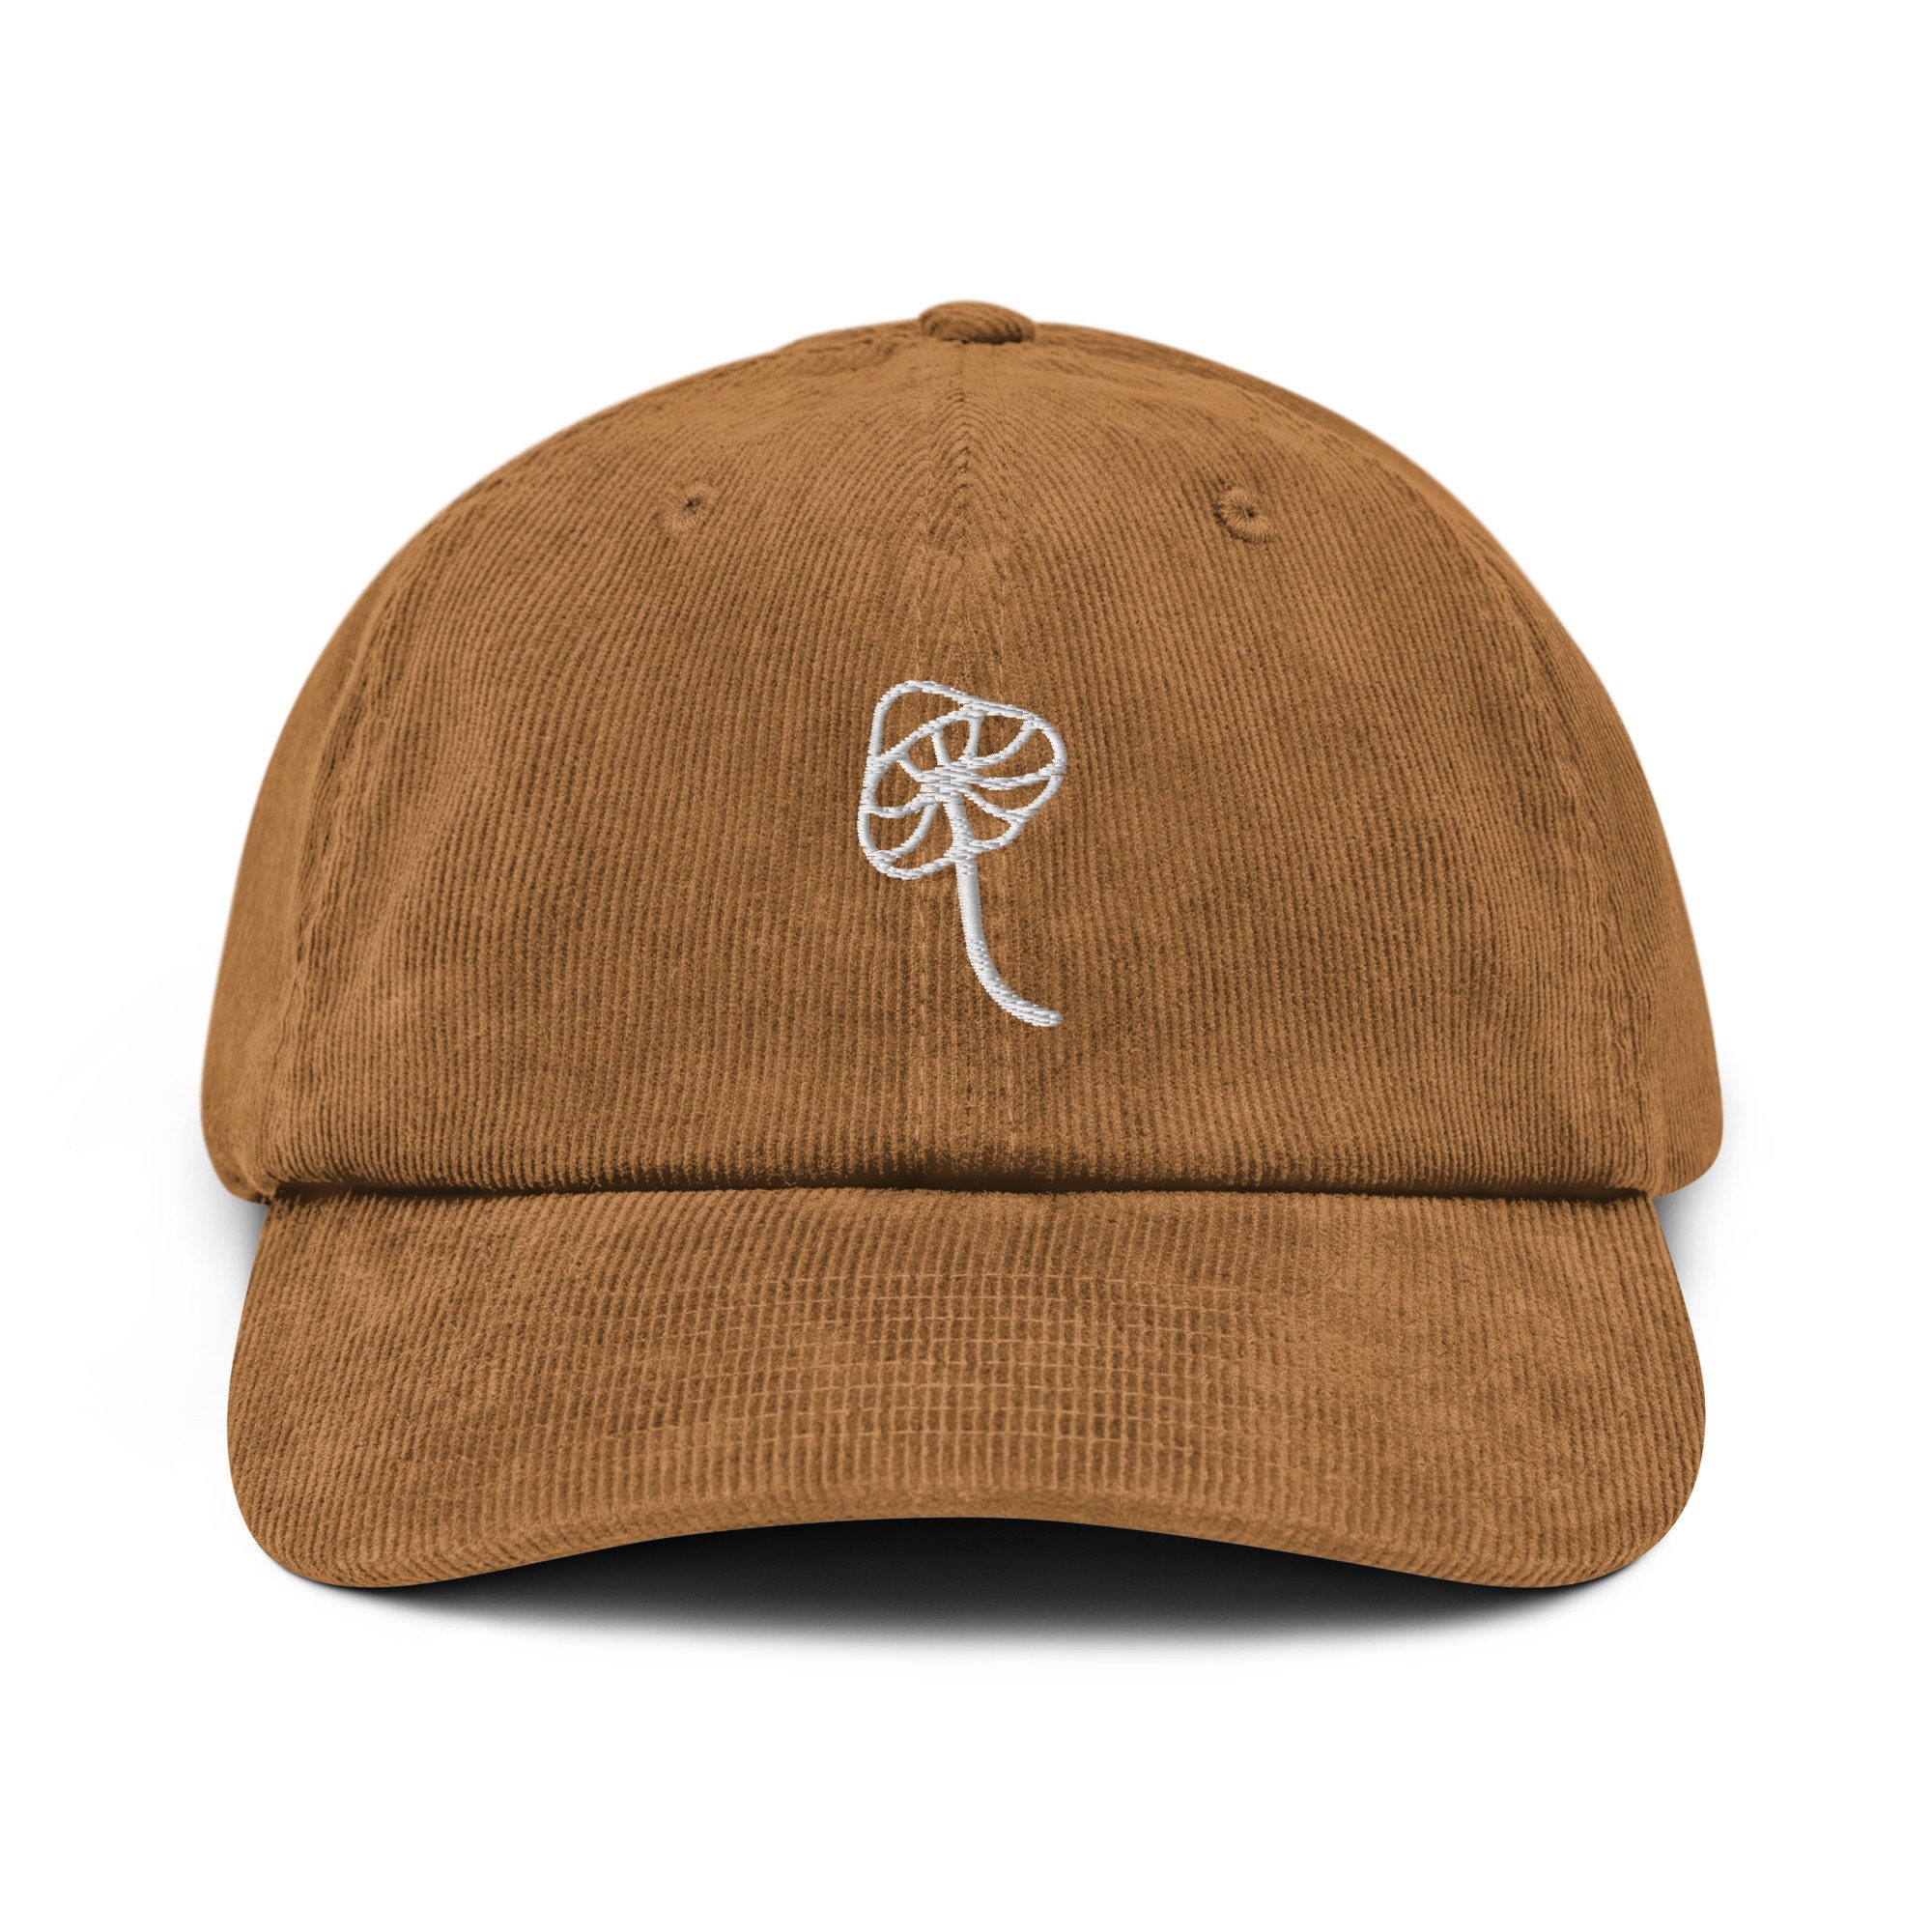 Mushroom Corduroy Hat, Embroidered Cord Cap, Adjustable Cap